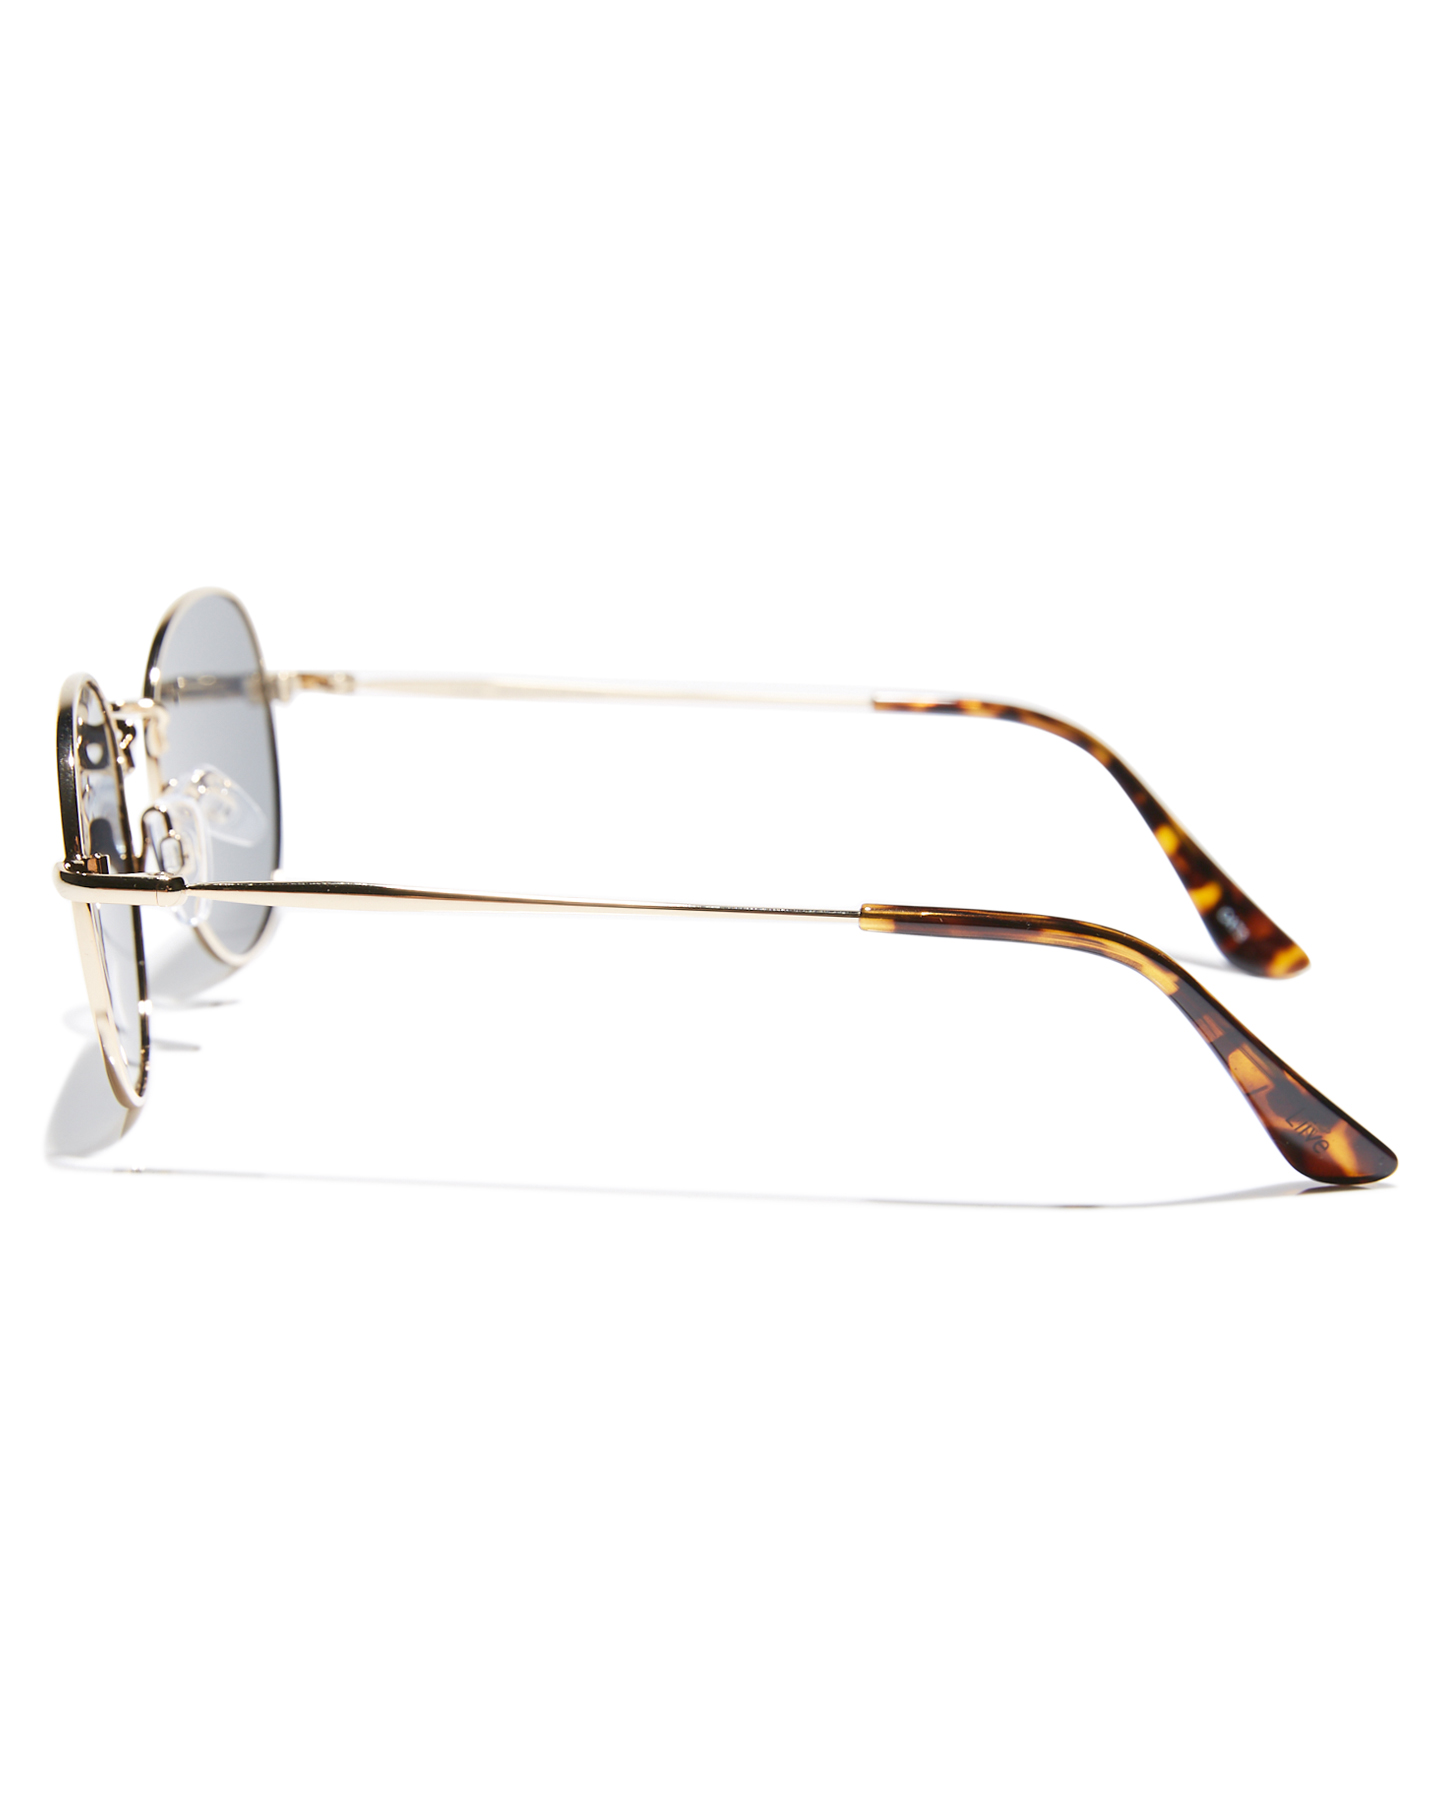 Liive Vision Impala Polarised Sunglasses - Gold | SurfStitch